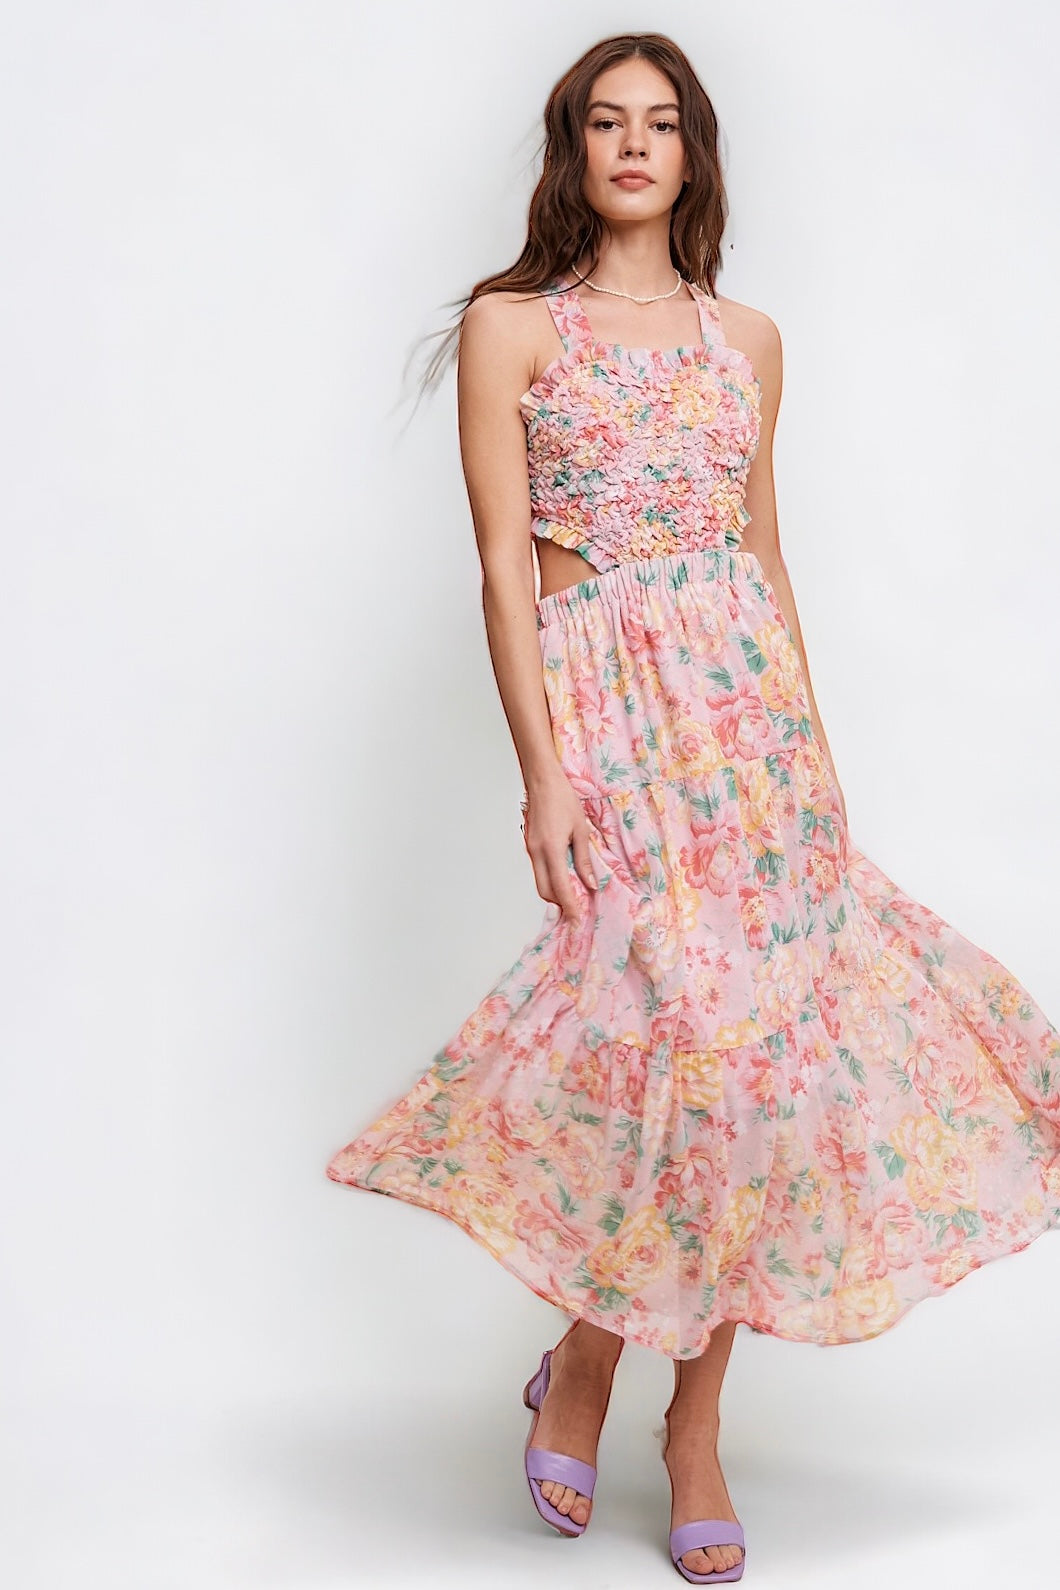 Coronado Floral Bubble Textured Two-Piece Style Chiffon Maxi Dress